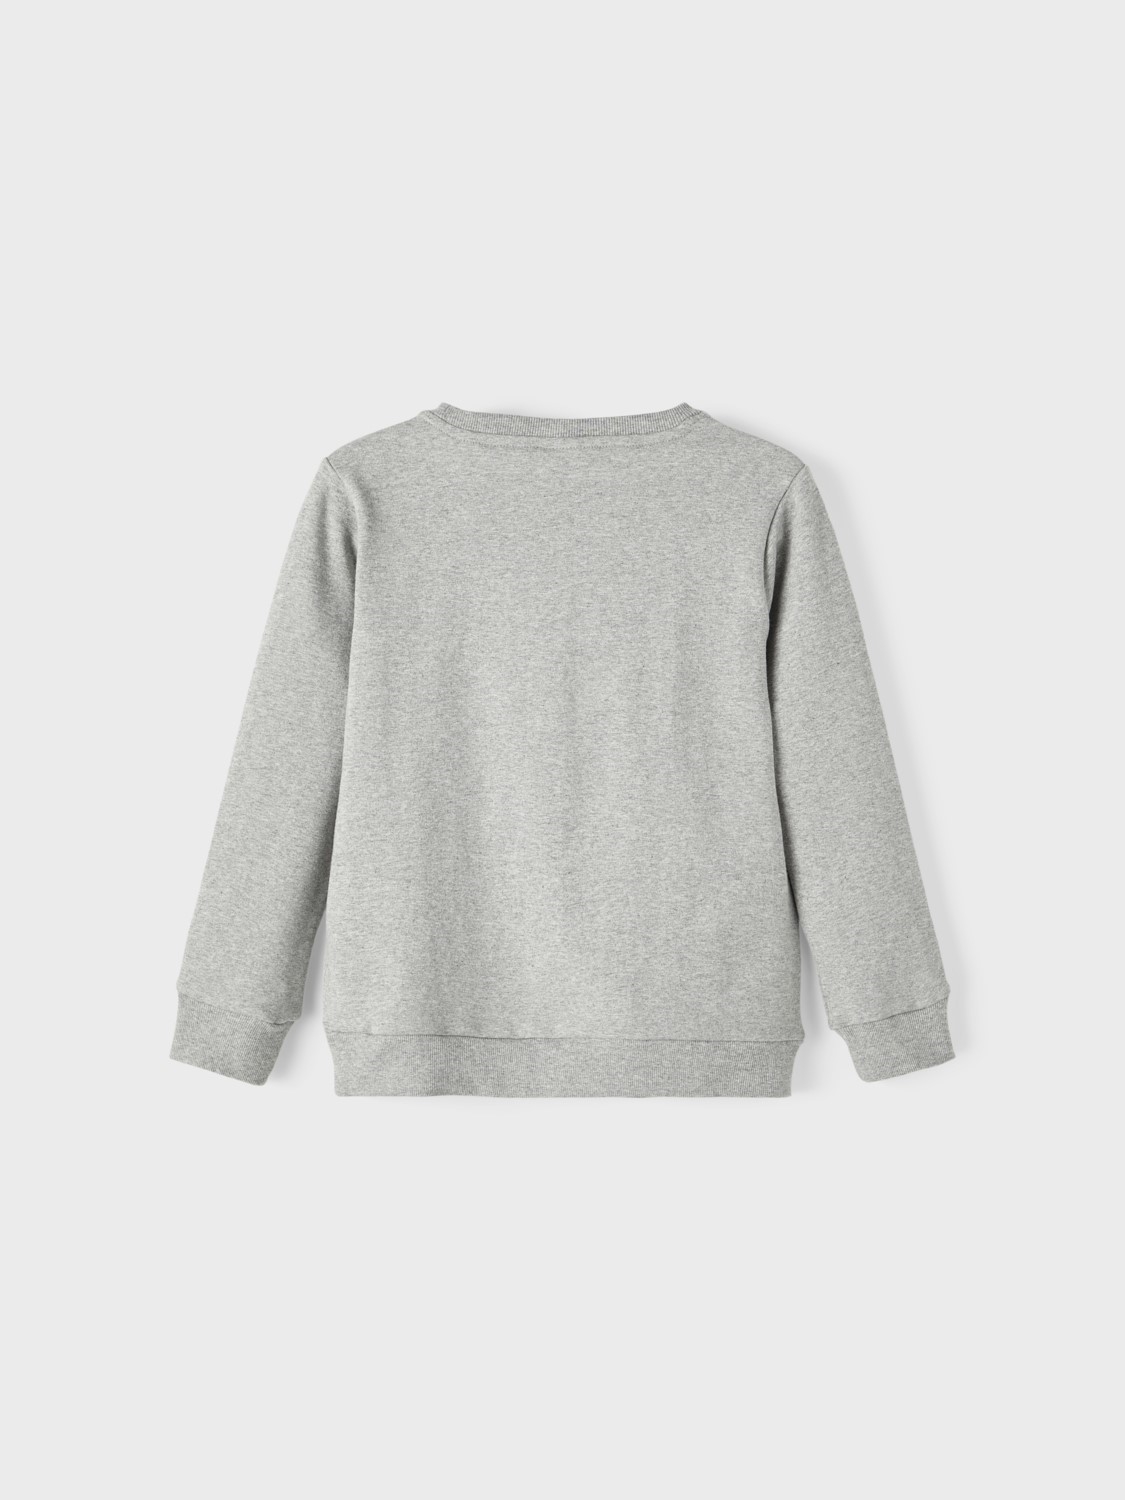 NAME IT Marvel Grey Sweatshirt Melange Foss